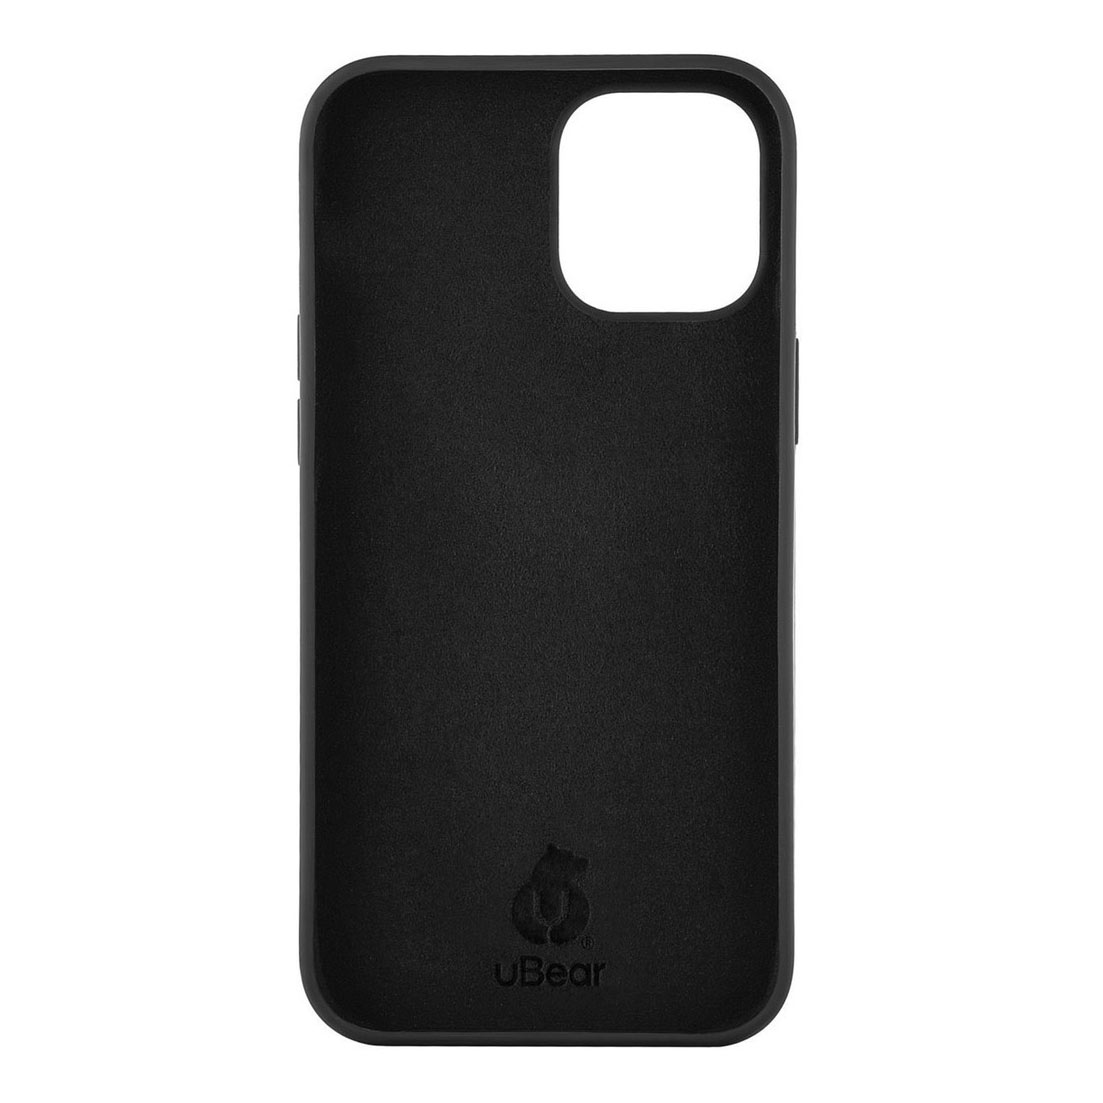 Чехол uBear Touch Case для смартфона Apple iPhone 12 mini, черный - фото 2